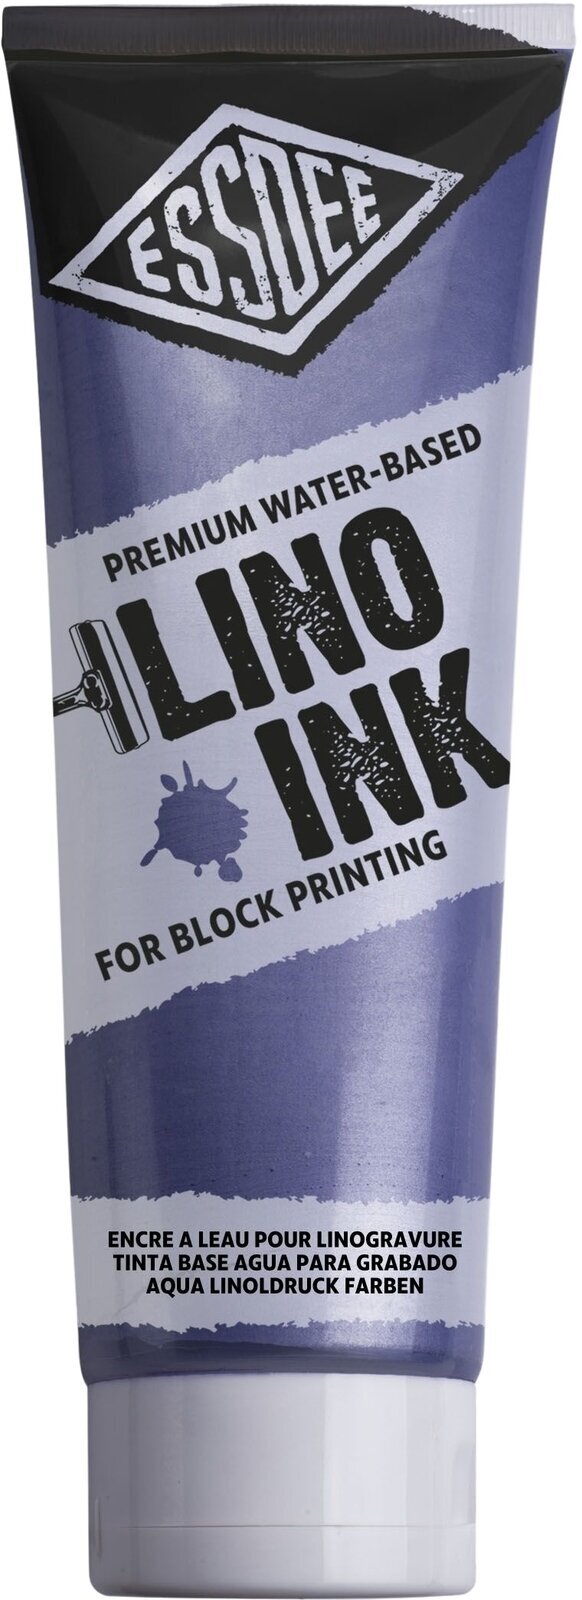 Farbe für Linolschnitt Essdee Block Printing Ink Farbe für Linolschnitt Pearlescent Violet 300 ml